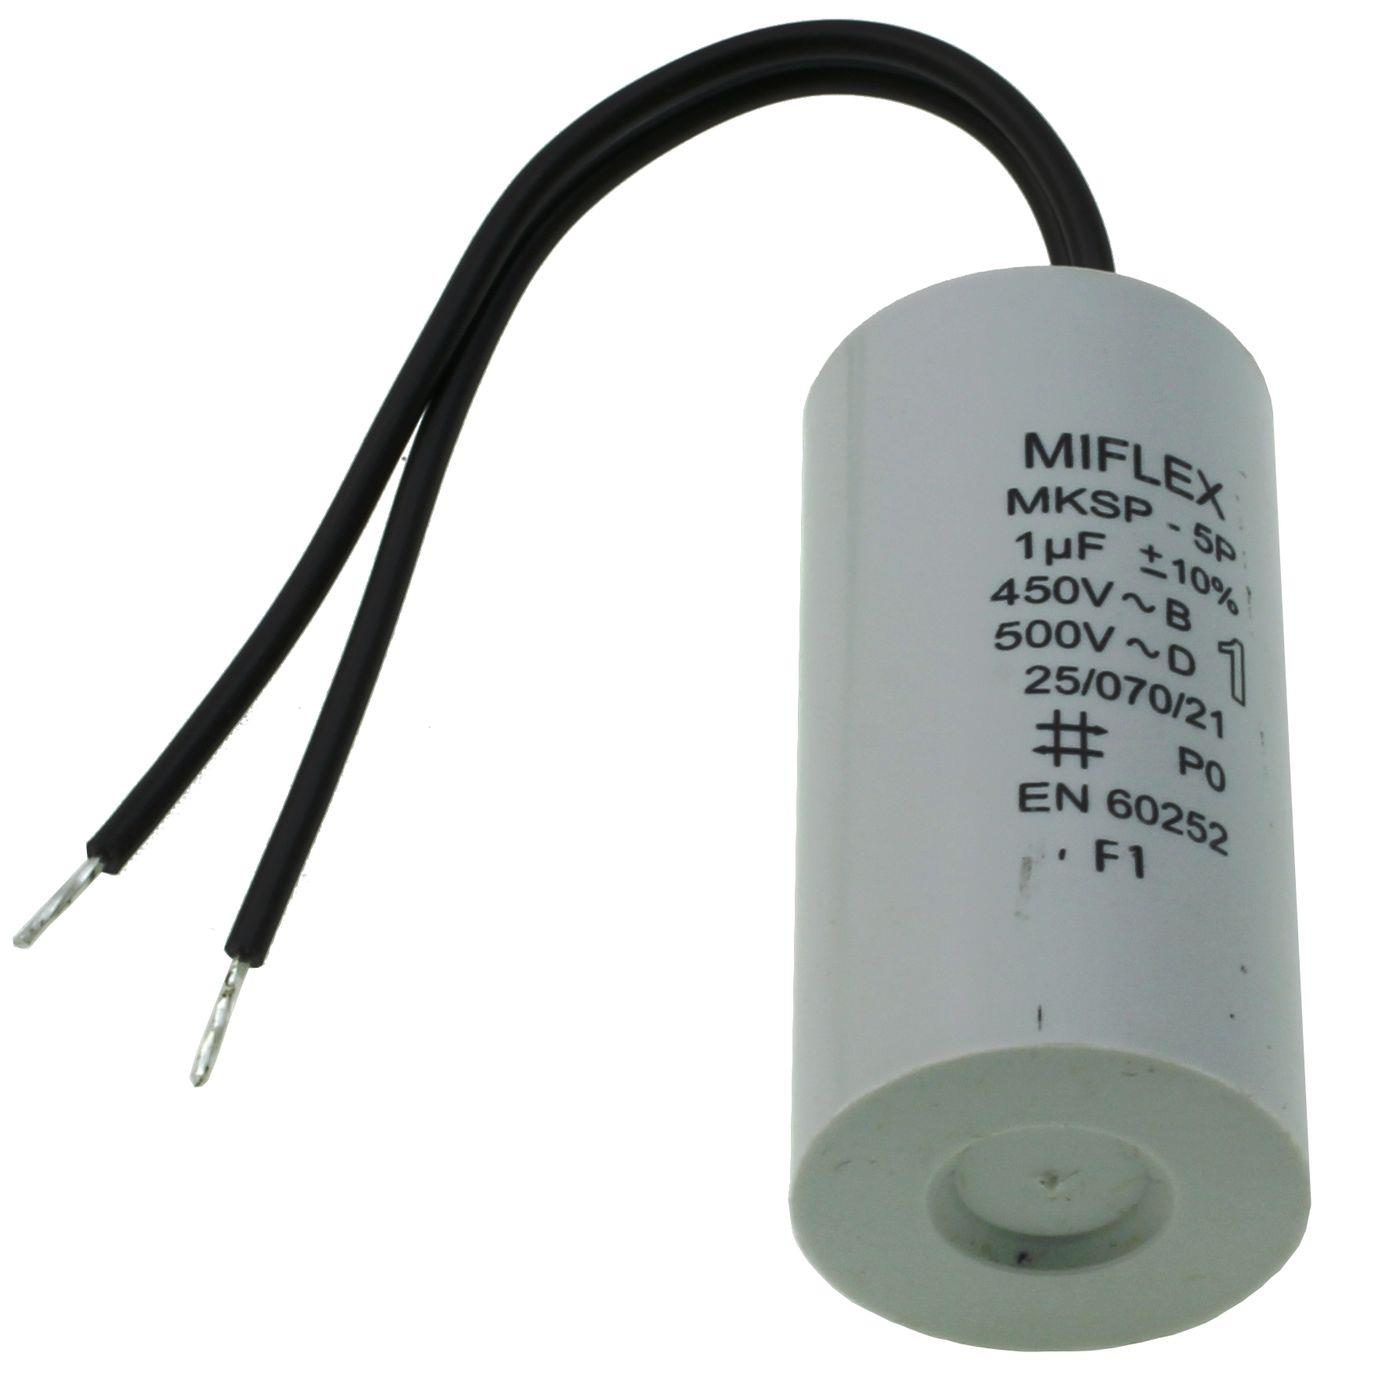 Anlaufkondensator Motorkondensator 1µF 450V 25x51mm Kabel 10cm Miflex 1uF